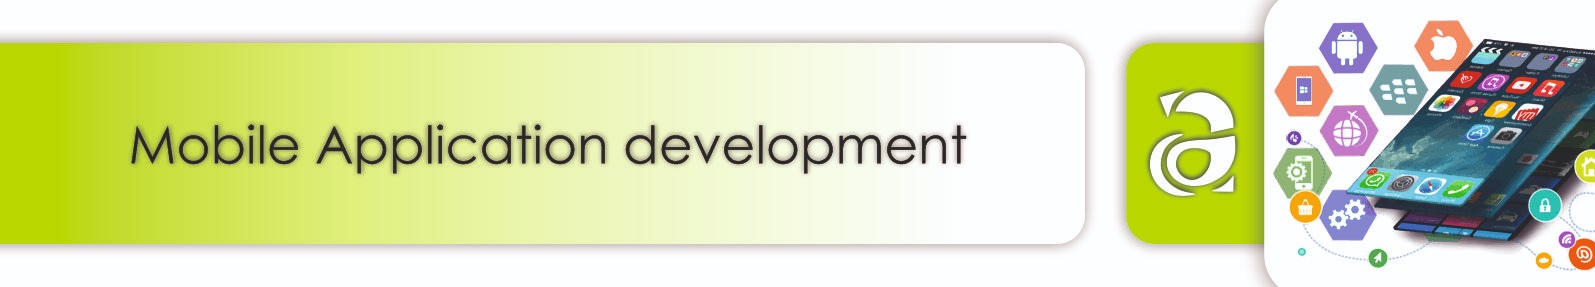 mobile app development1